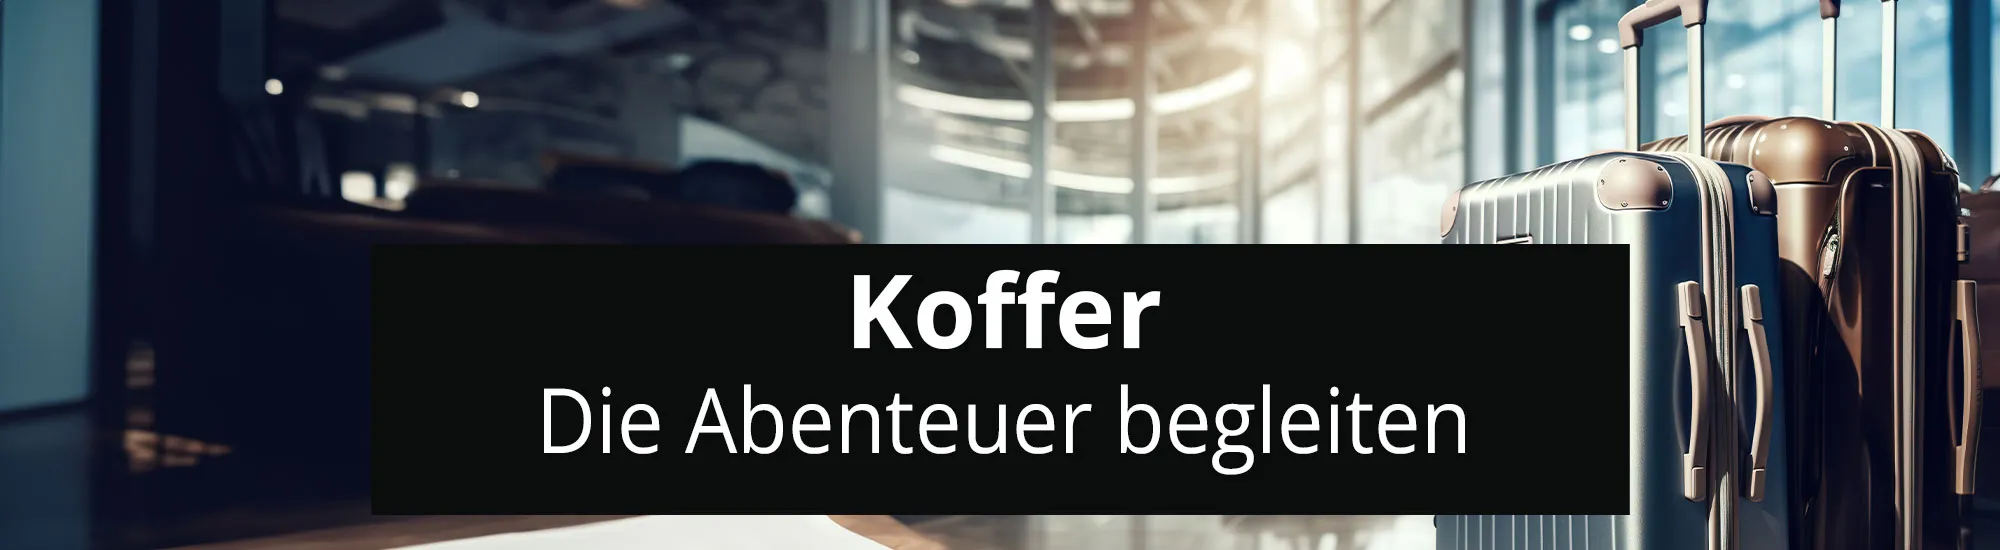 Koffer header rosier online shop